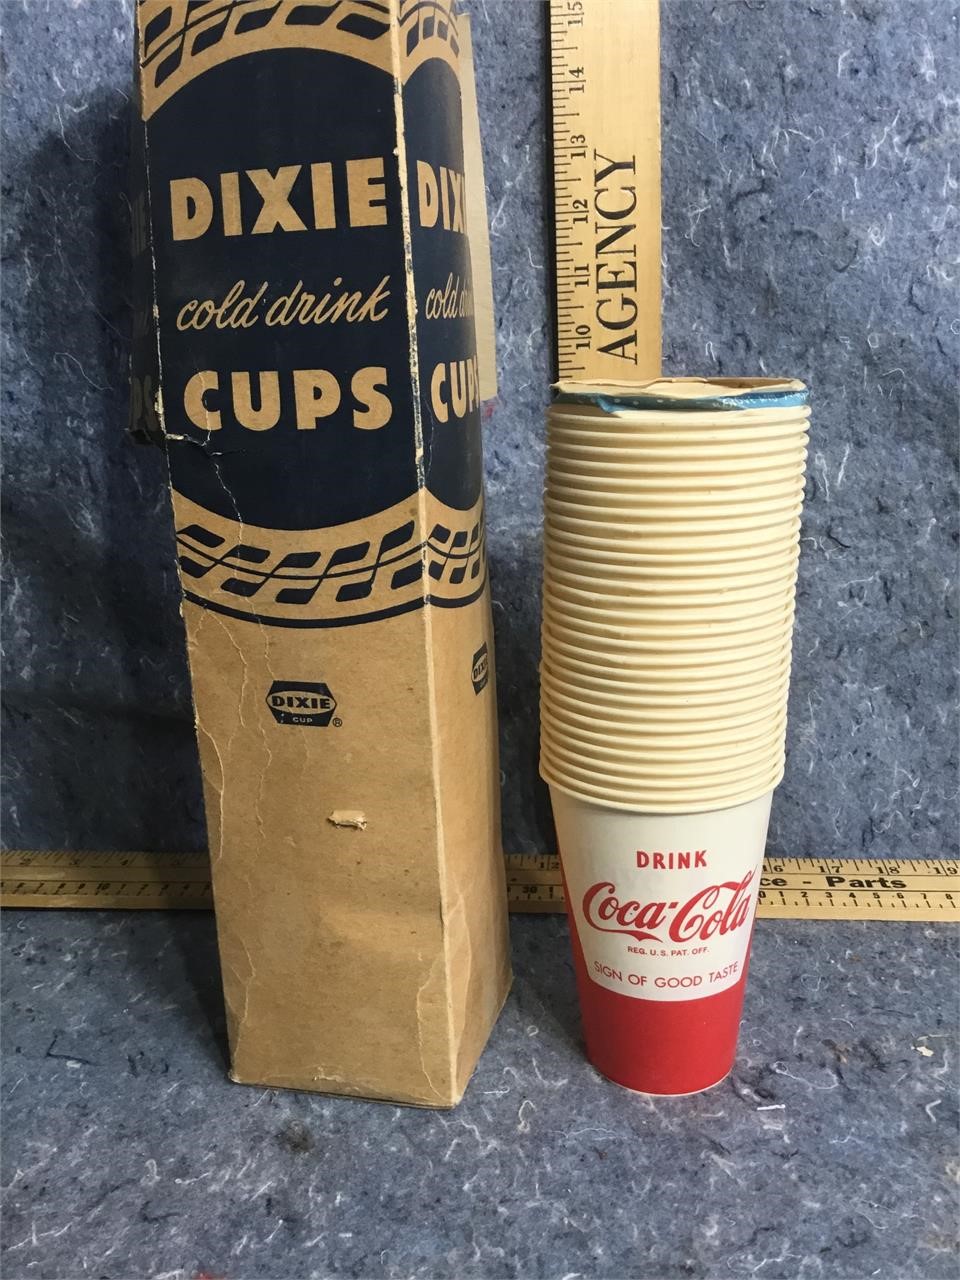 Coca Cola Dixie cups